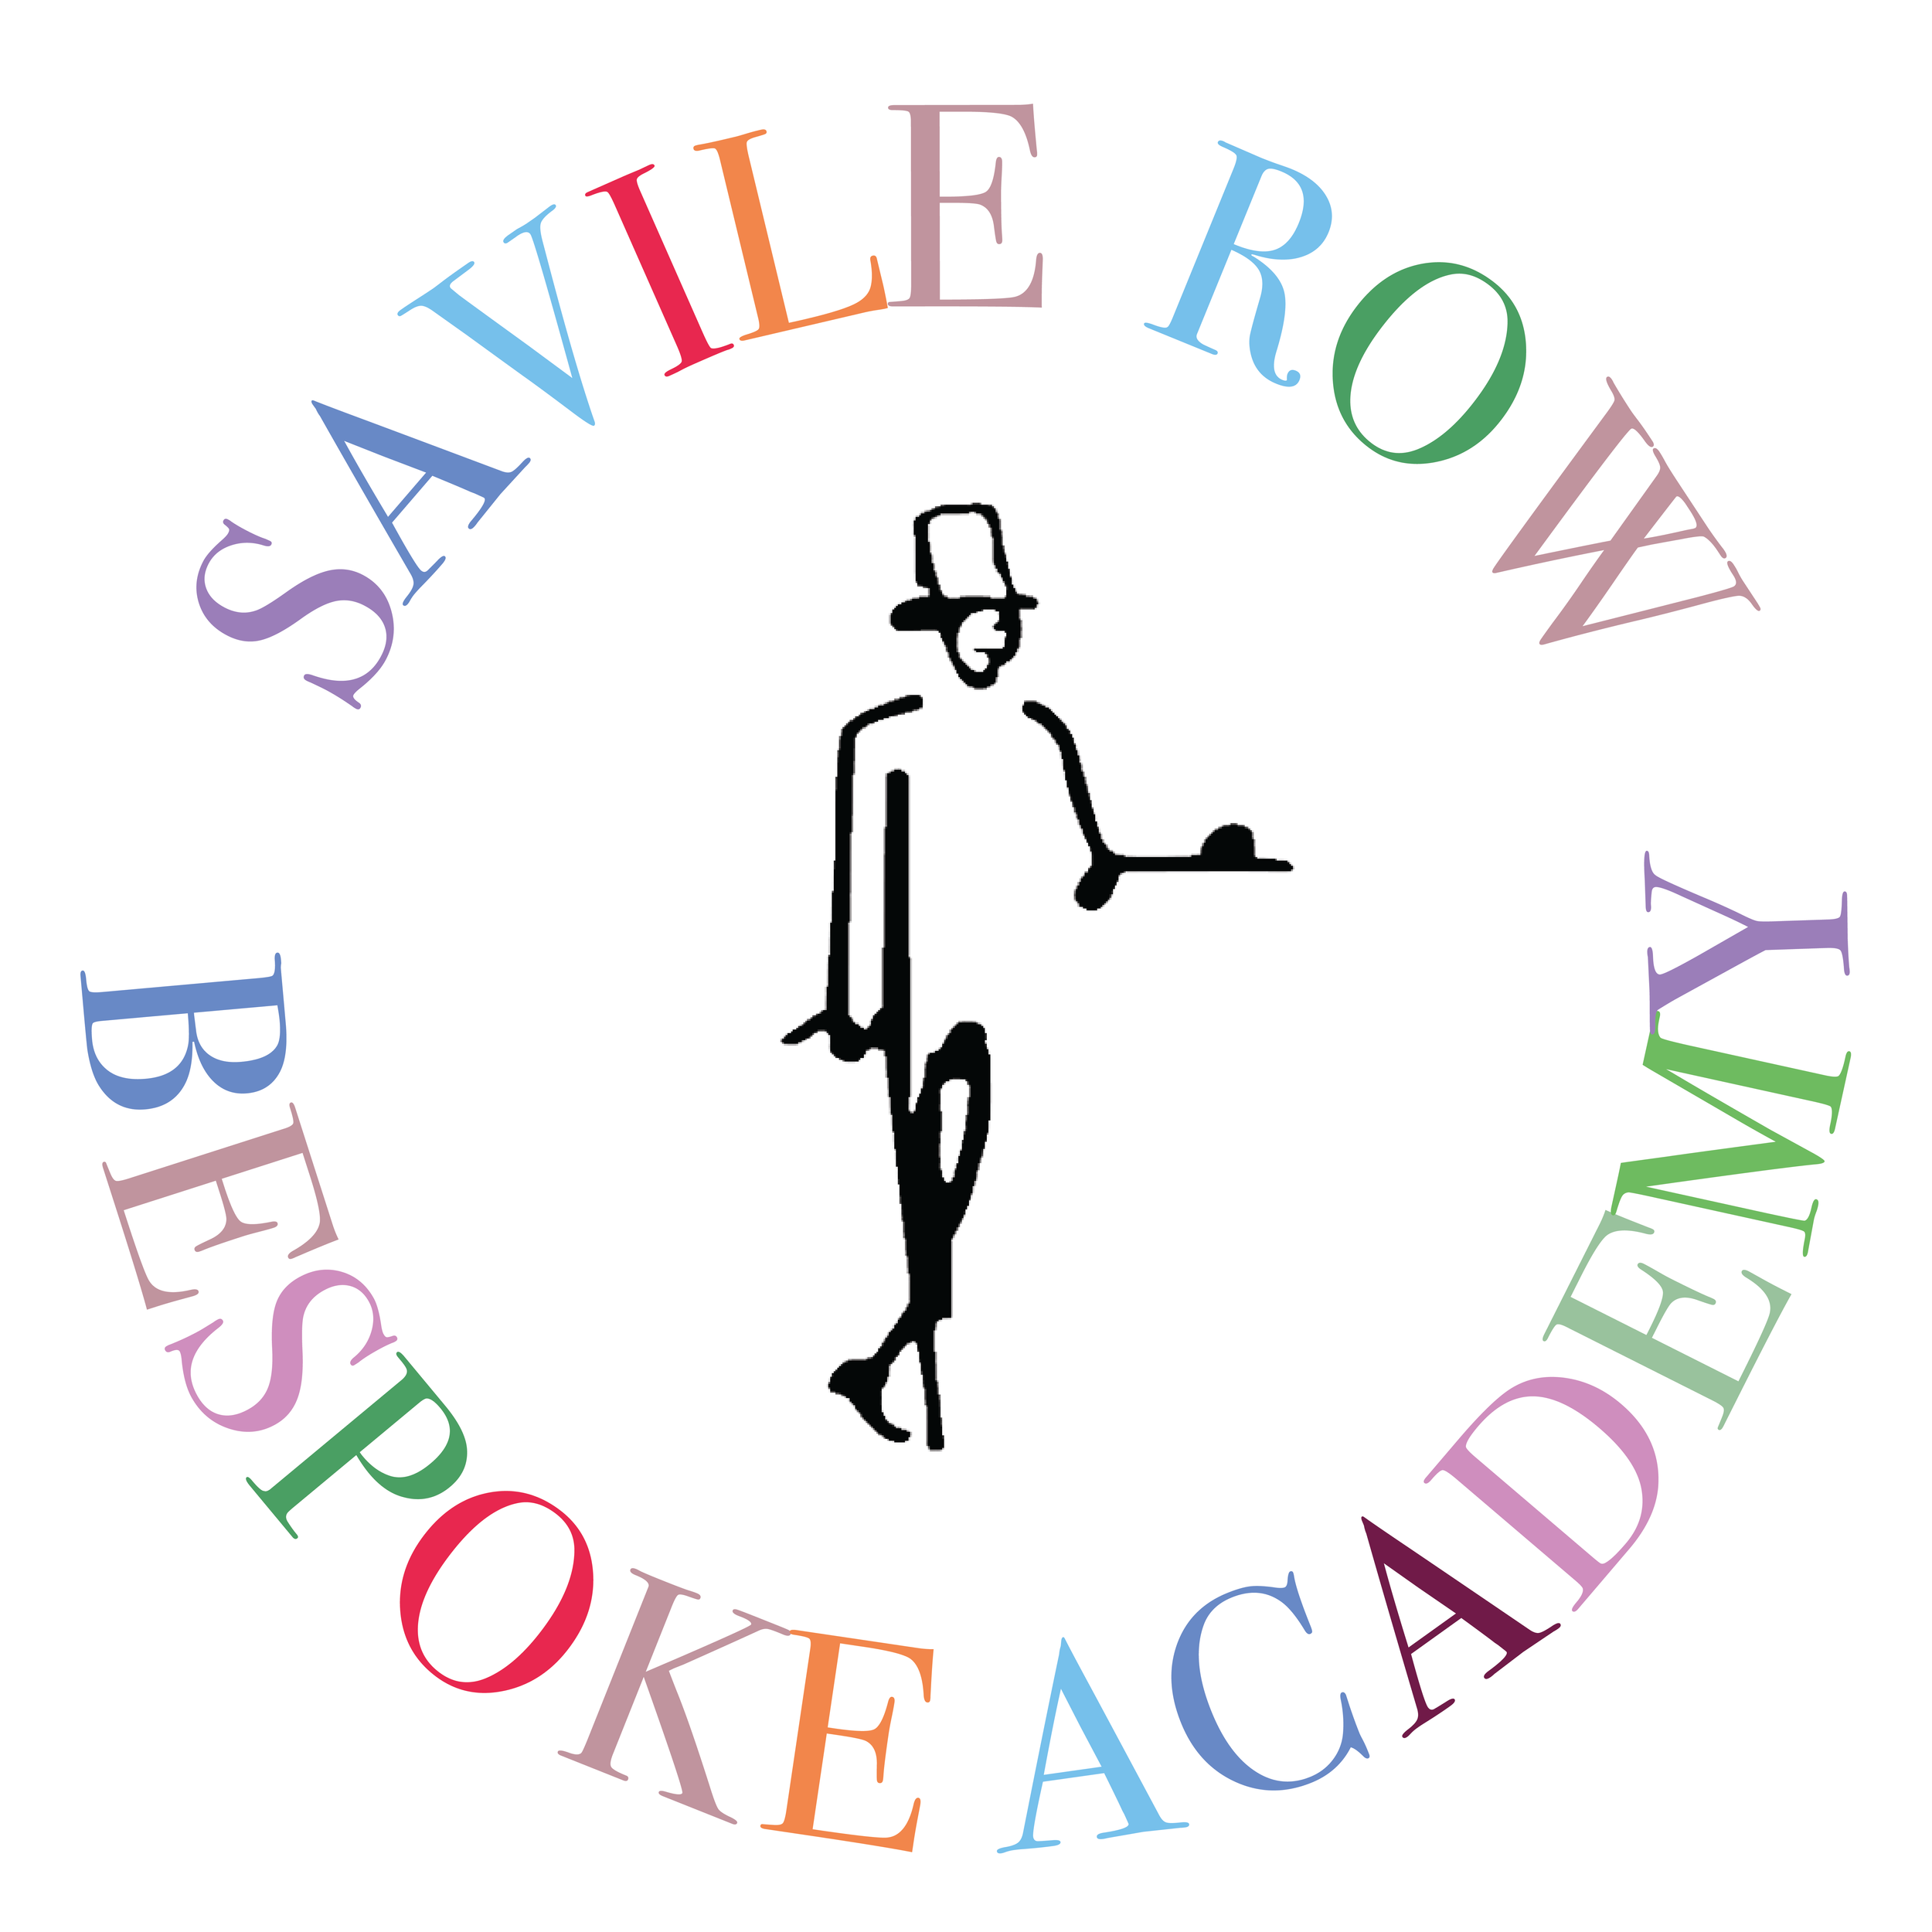 Savile Row Bespoke Academy